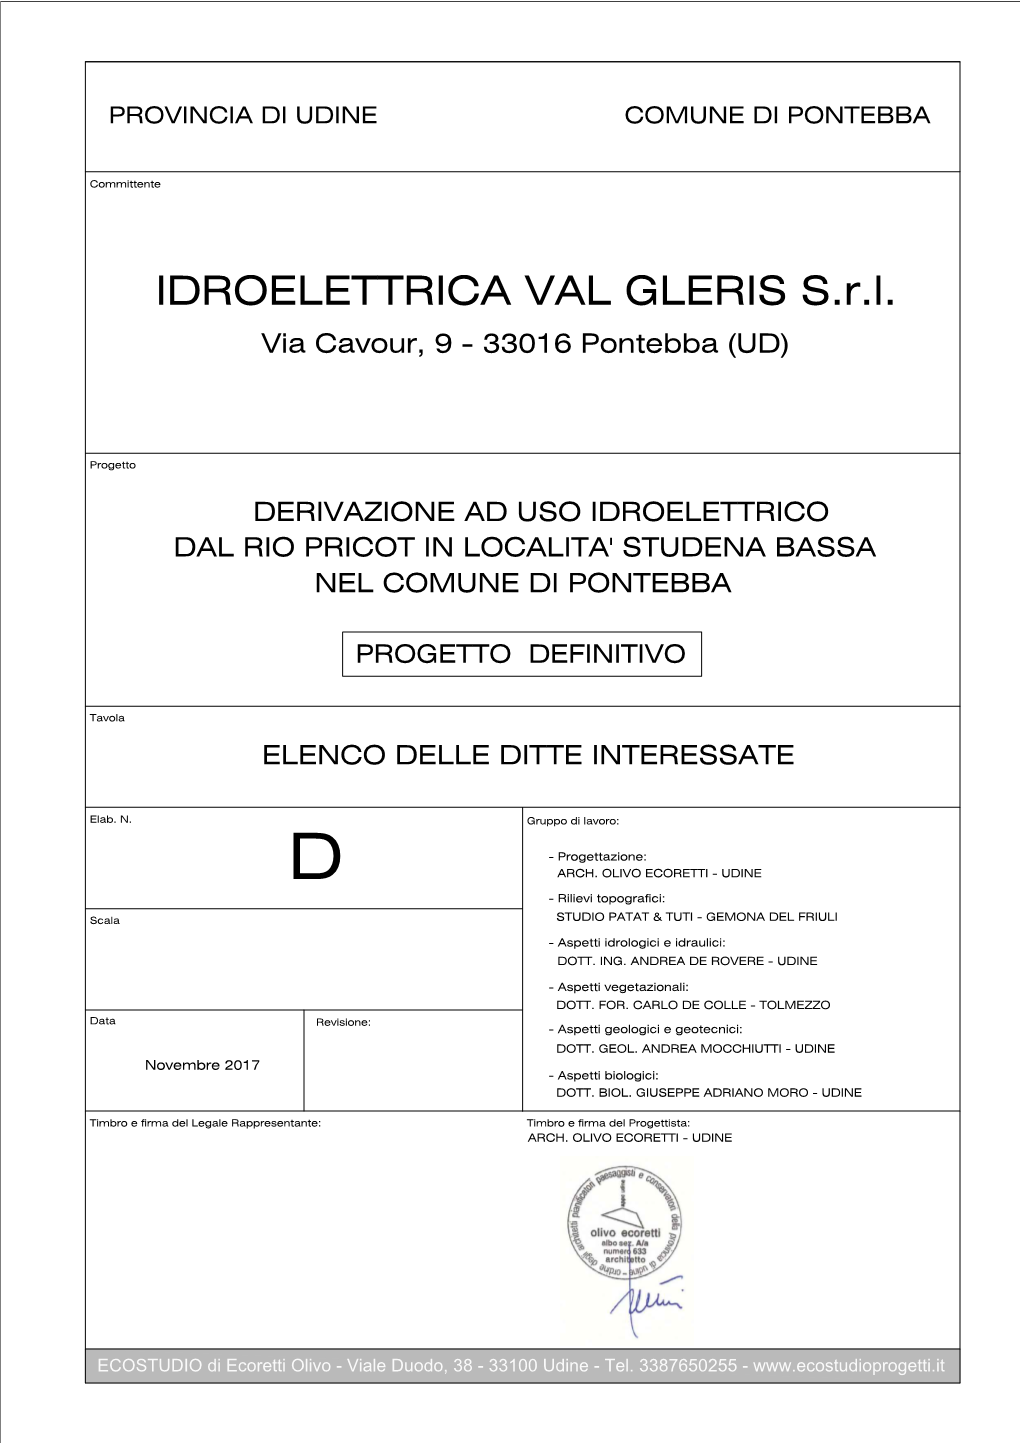 IDROELETTRICA VAL GLERIS S.R.L. Via Cavour, 9 - 33016 Pontebba (UD)